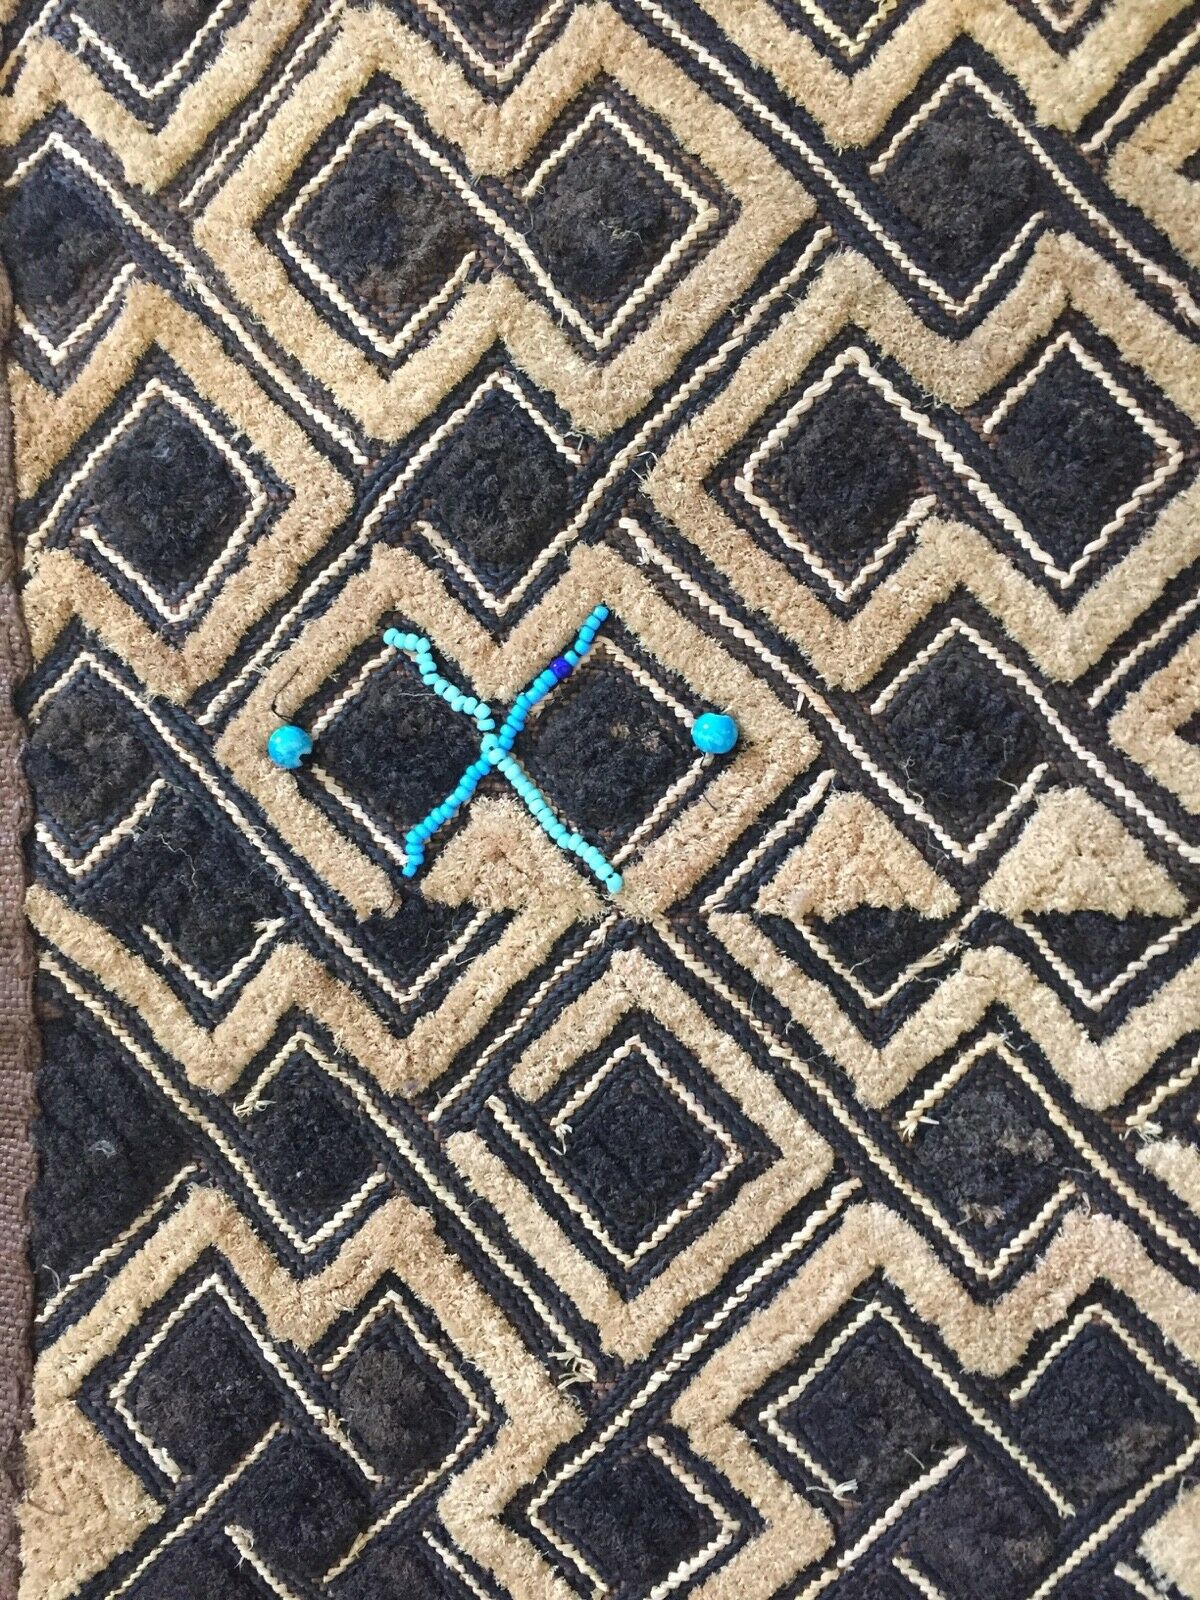 #1867 Kuba Kasai Velvet Boutallah Raffia Textile , Zaire Africa W/Turquoise Beads